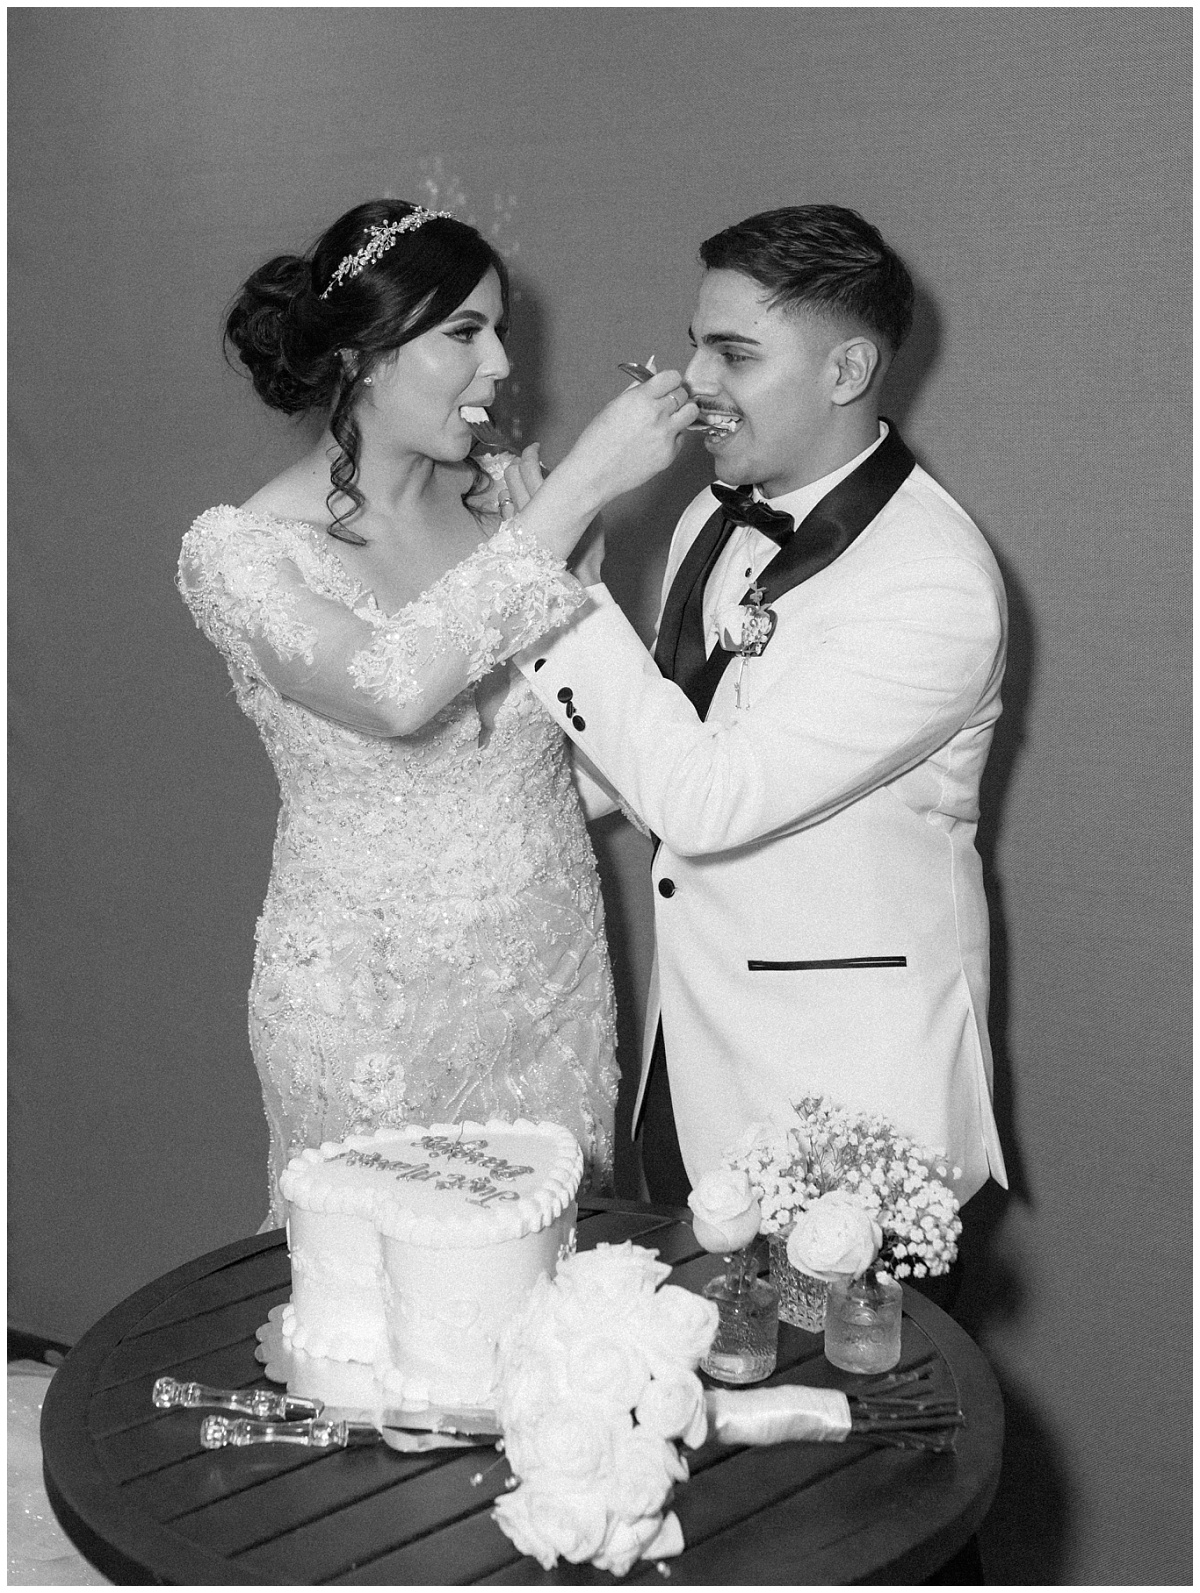 Classic Heart Shape Wedding Cake with Husband and Wife Cake Cutting